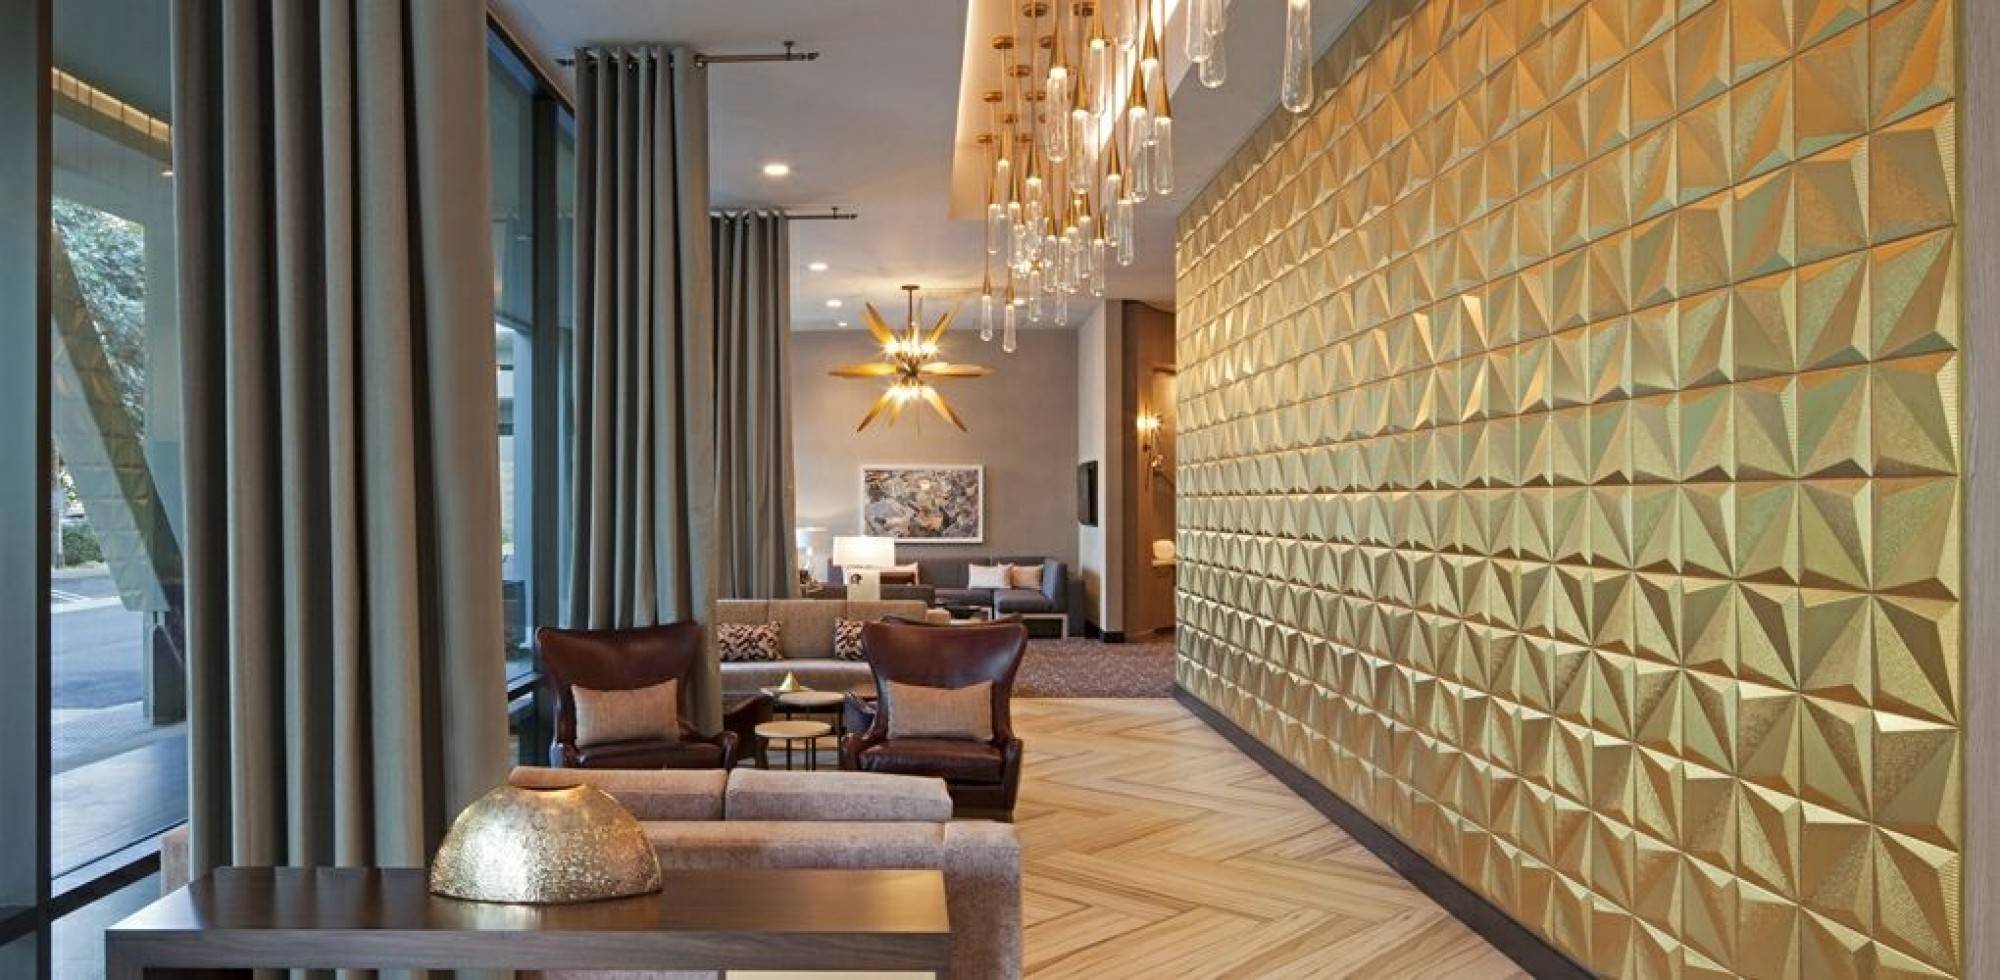 P-00108-HOTELES-Hotel origami gold-2000x